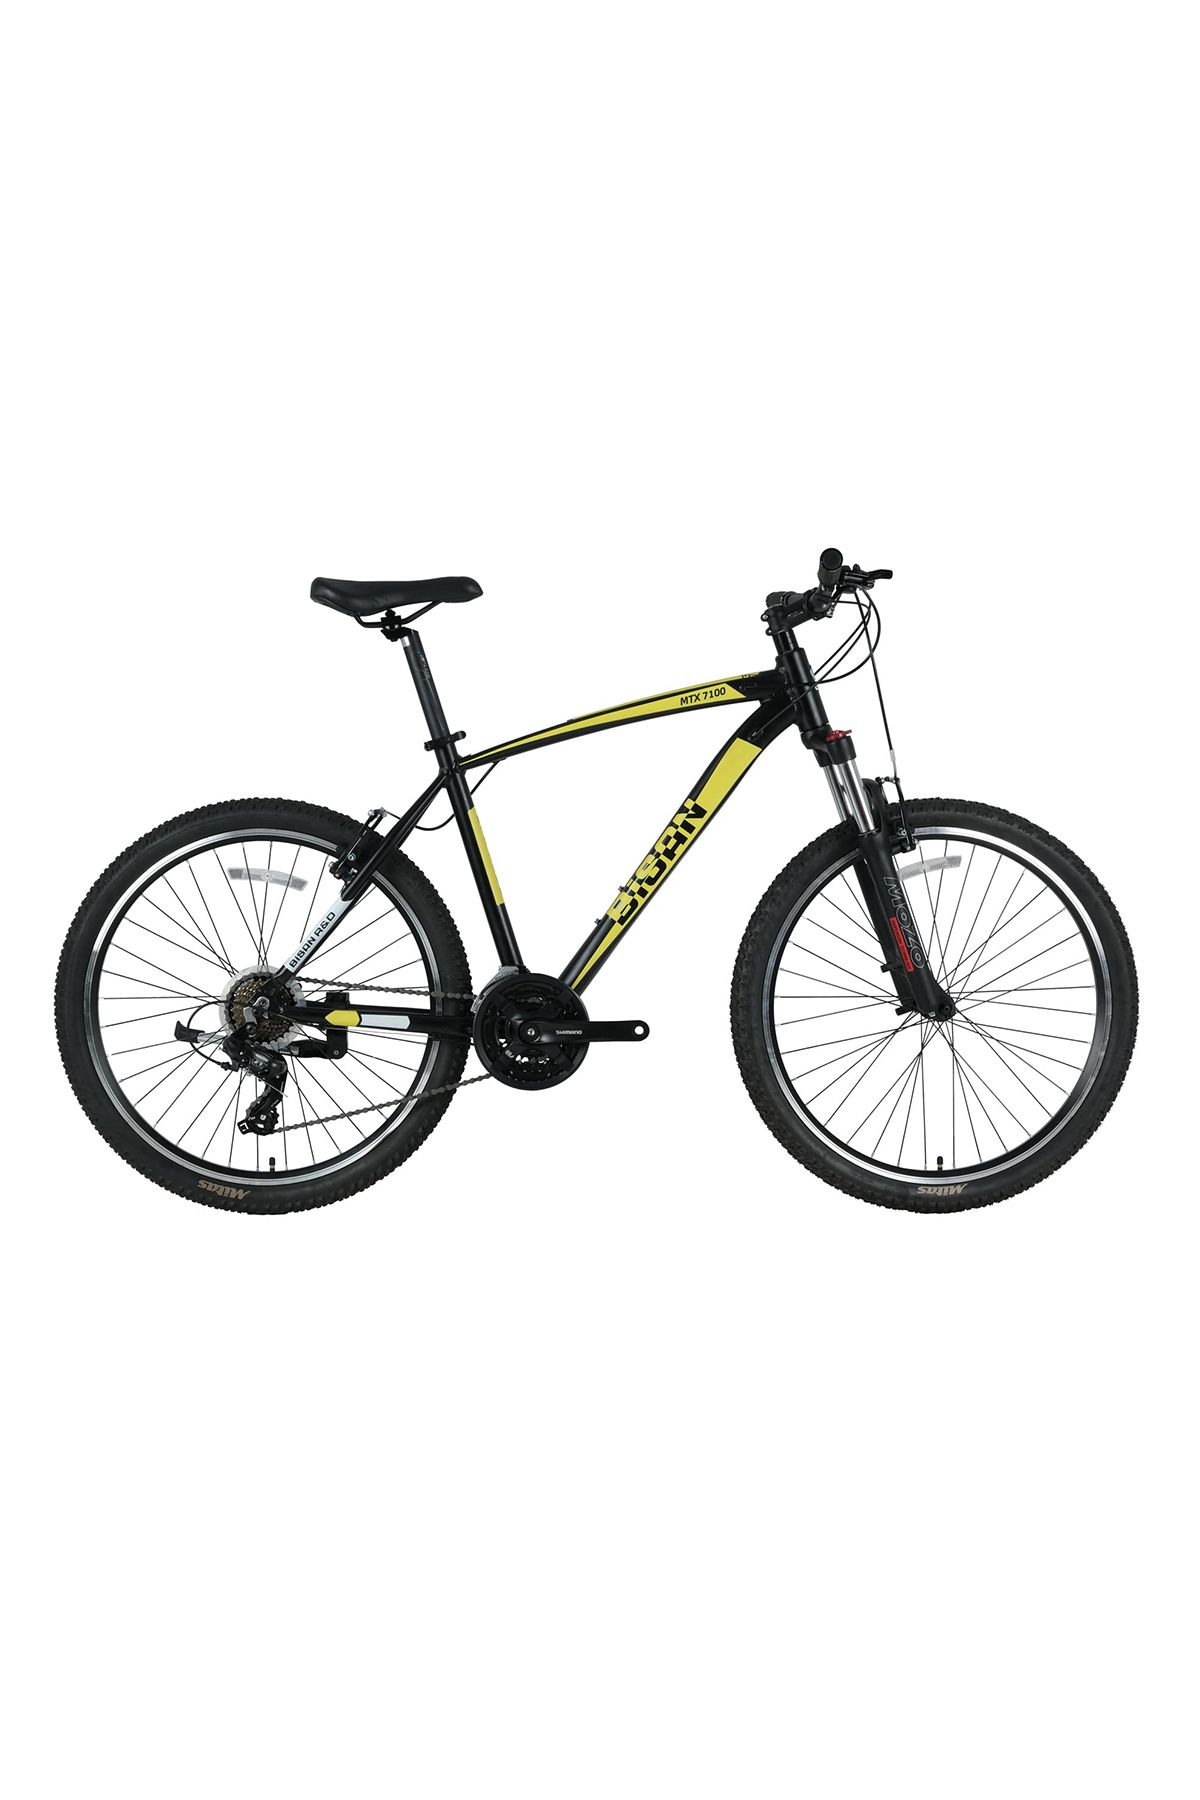 Bisan Mtx 7100 - 29 Jant Dağ Bisikleti 17' 43 cm (M) Kadro - Siyah Sarı